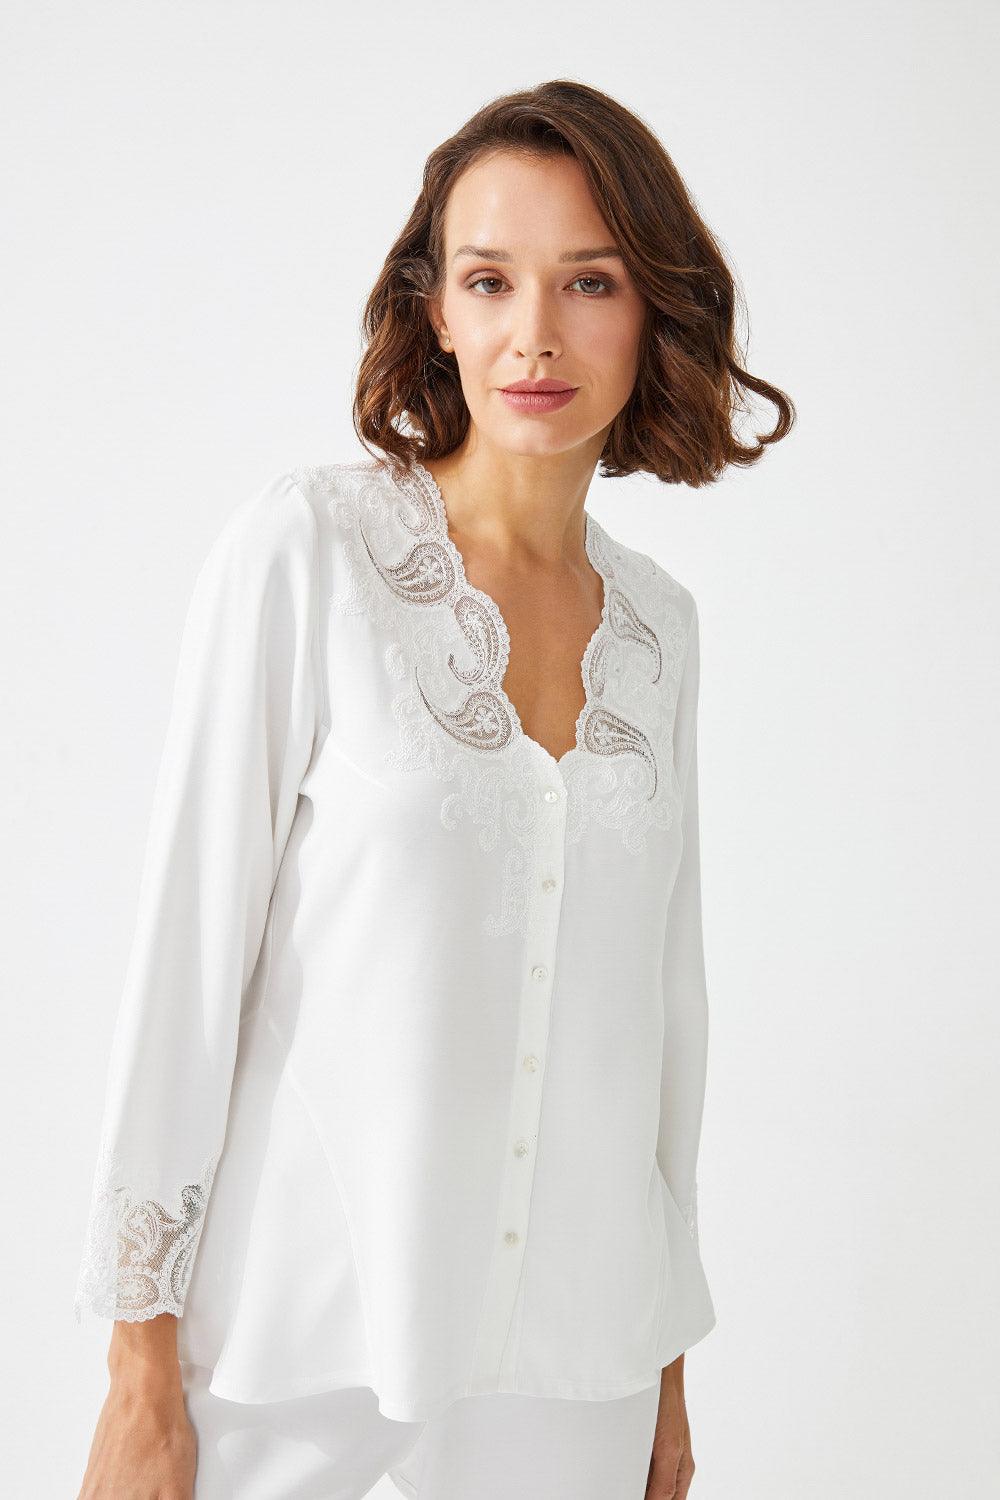 Ayana Trimmed Rayon Full Buttoned Long Sleeve Pyjama Set - Bocan